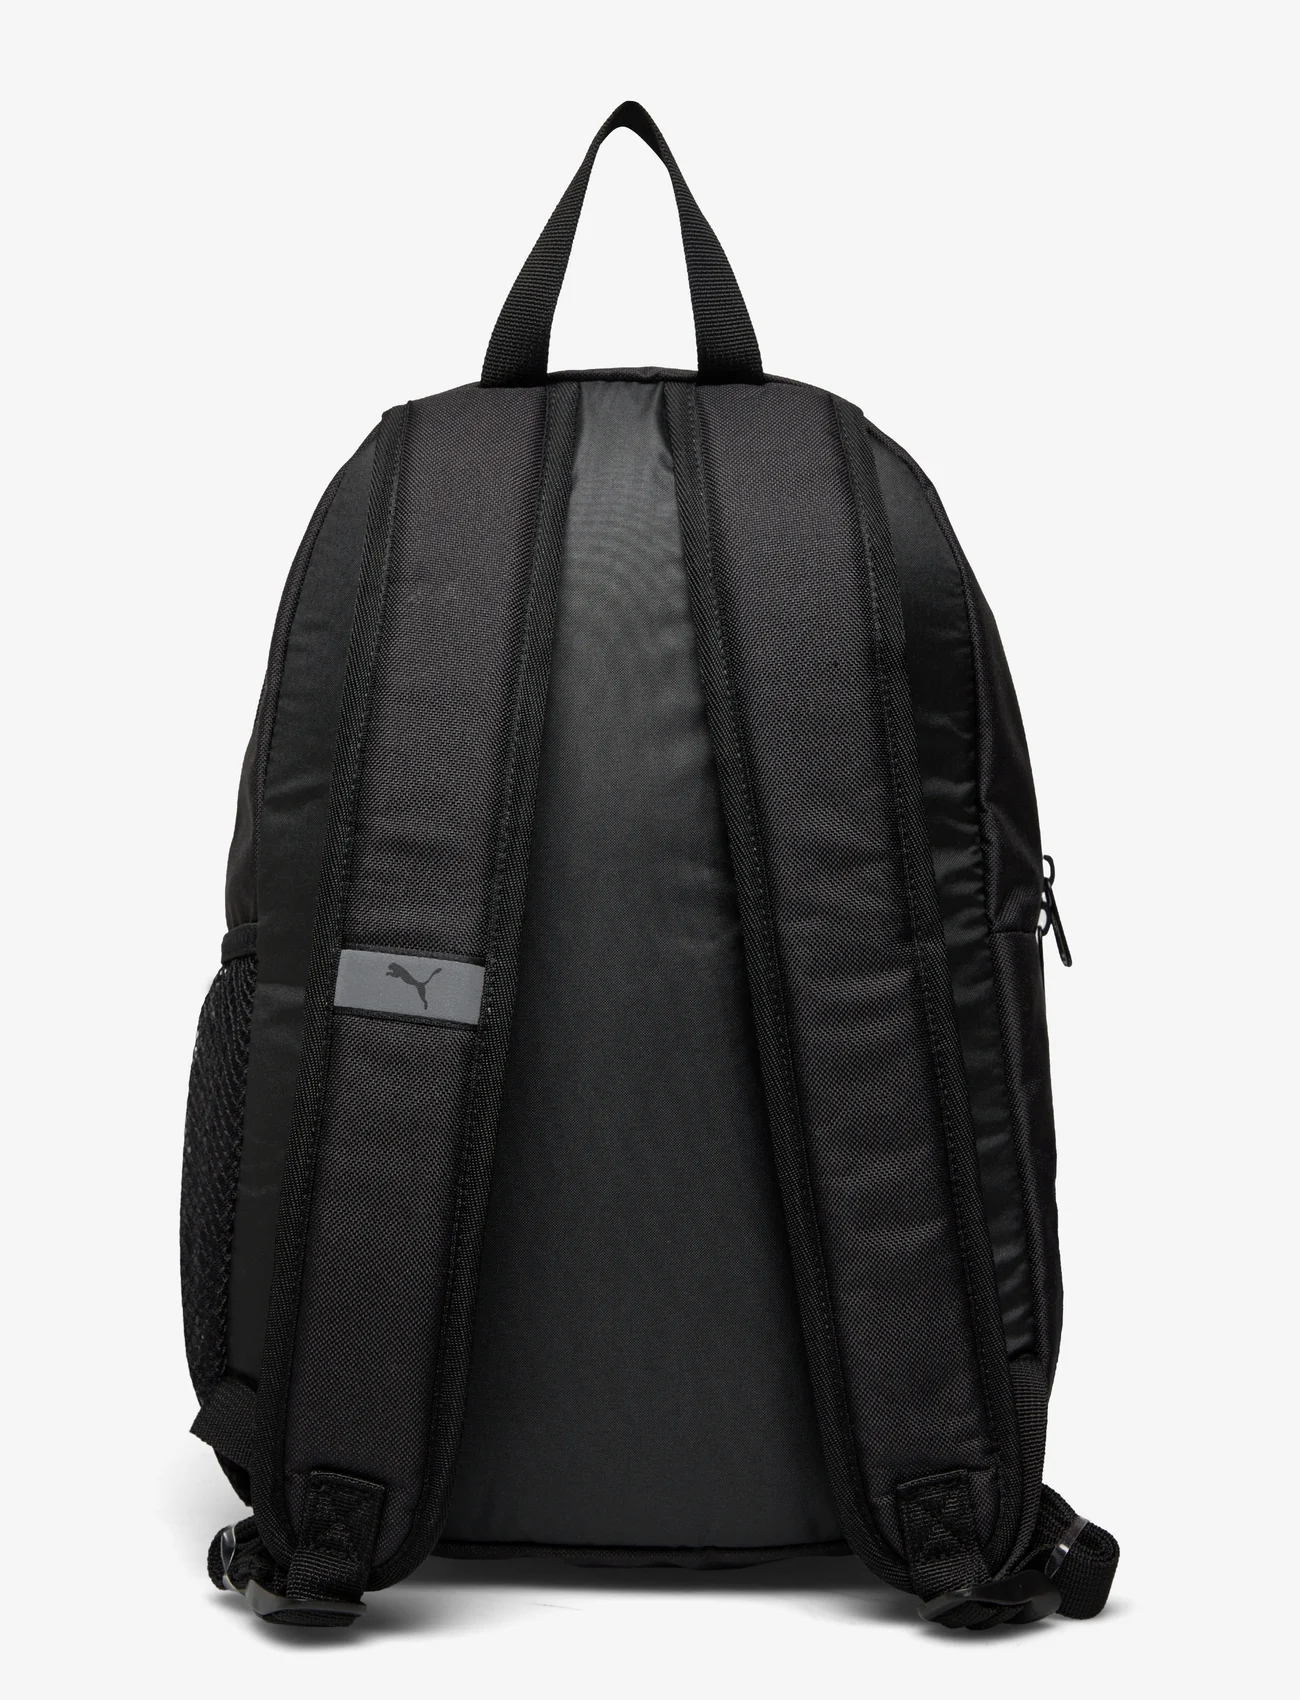 PUMA - PUMA Phase Small Backpack - summer savings - puma black - 1